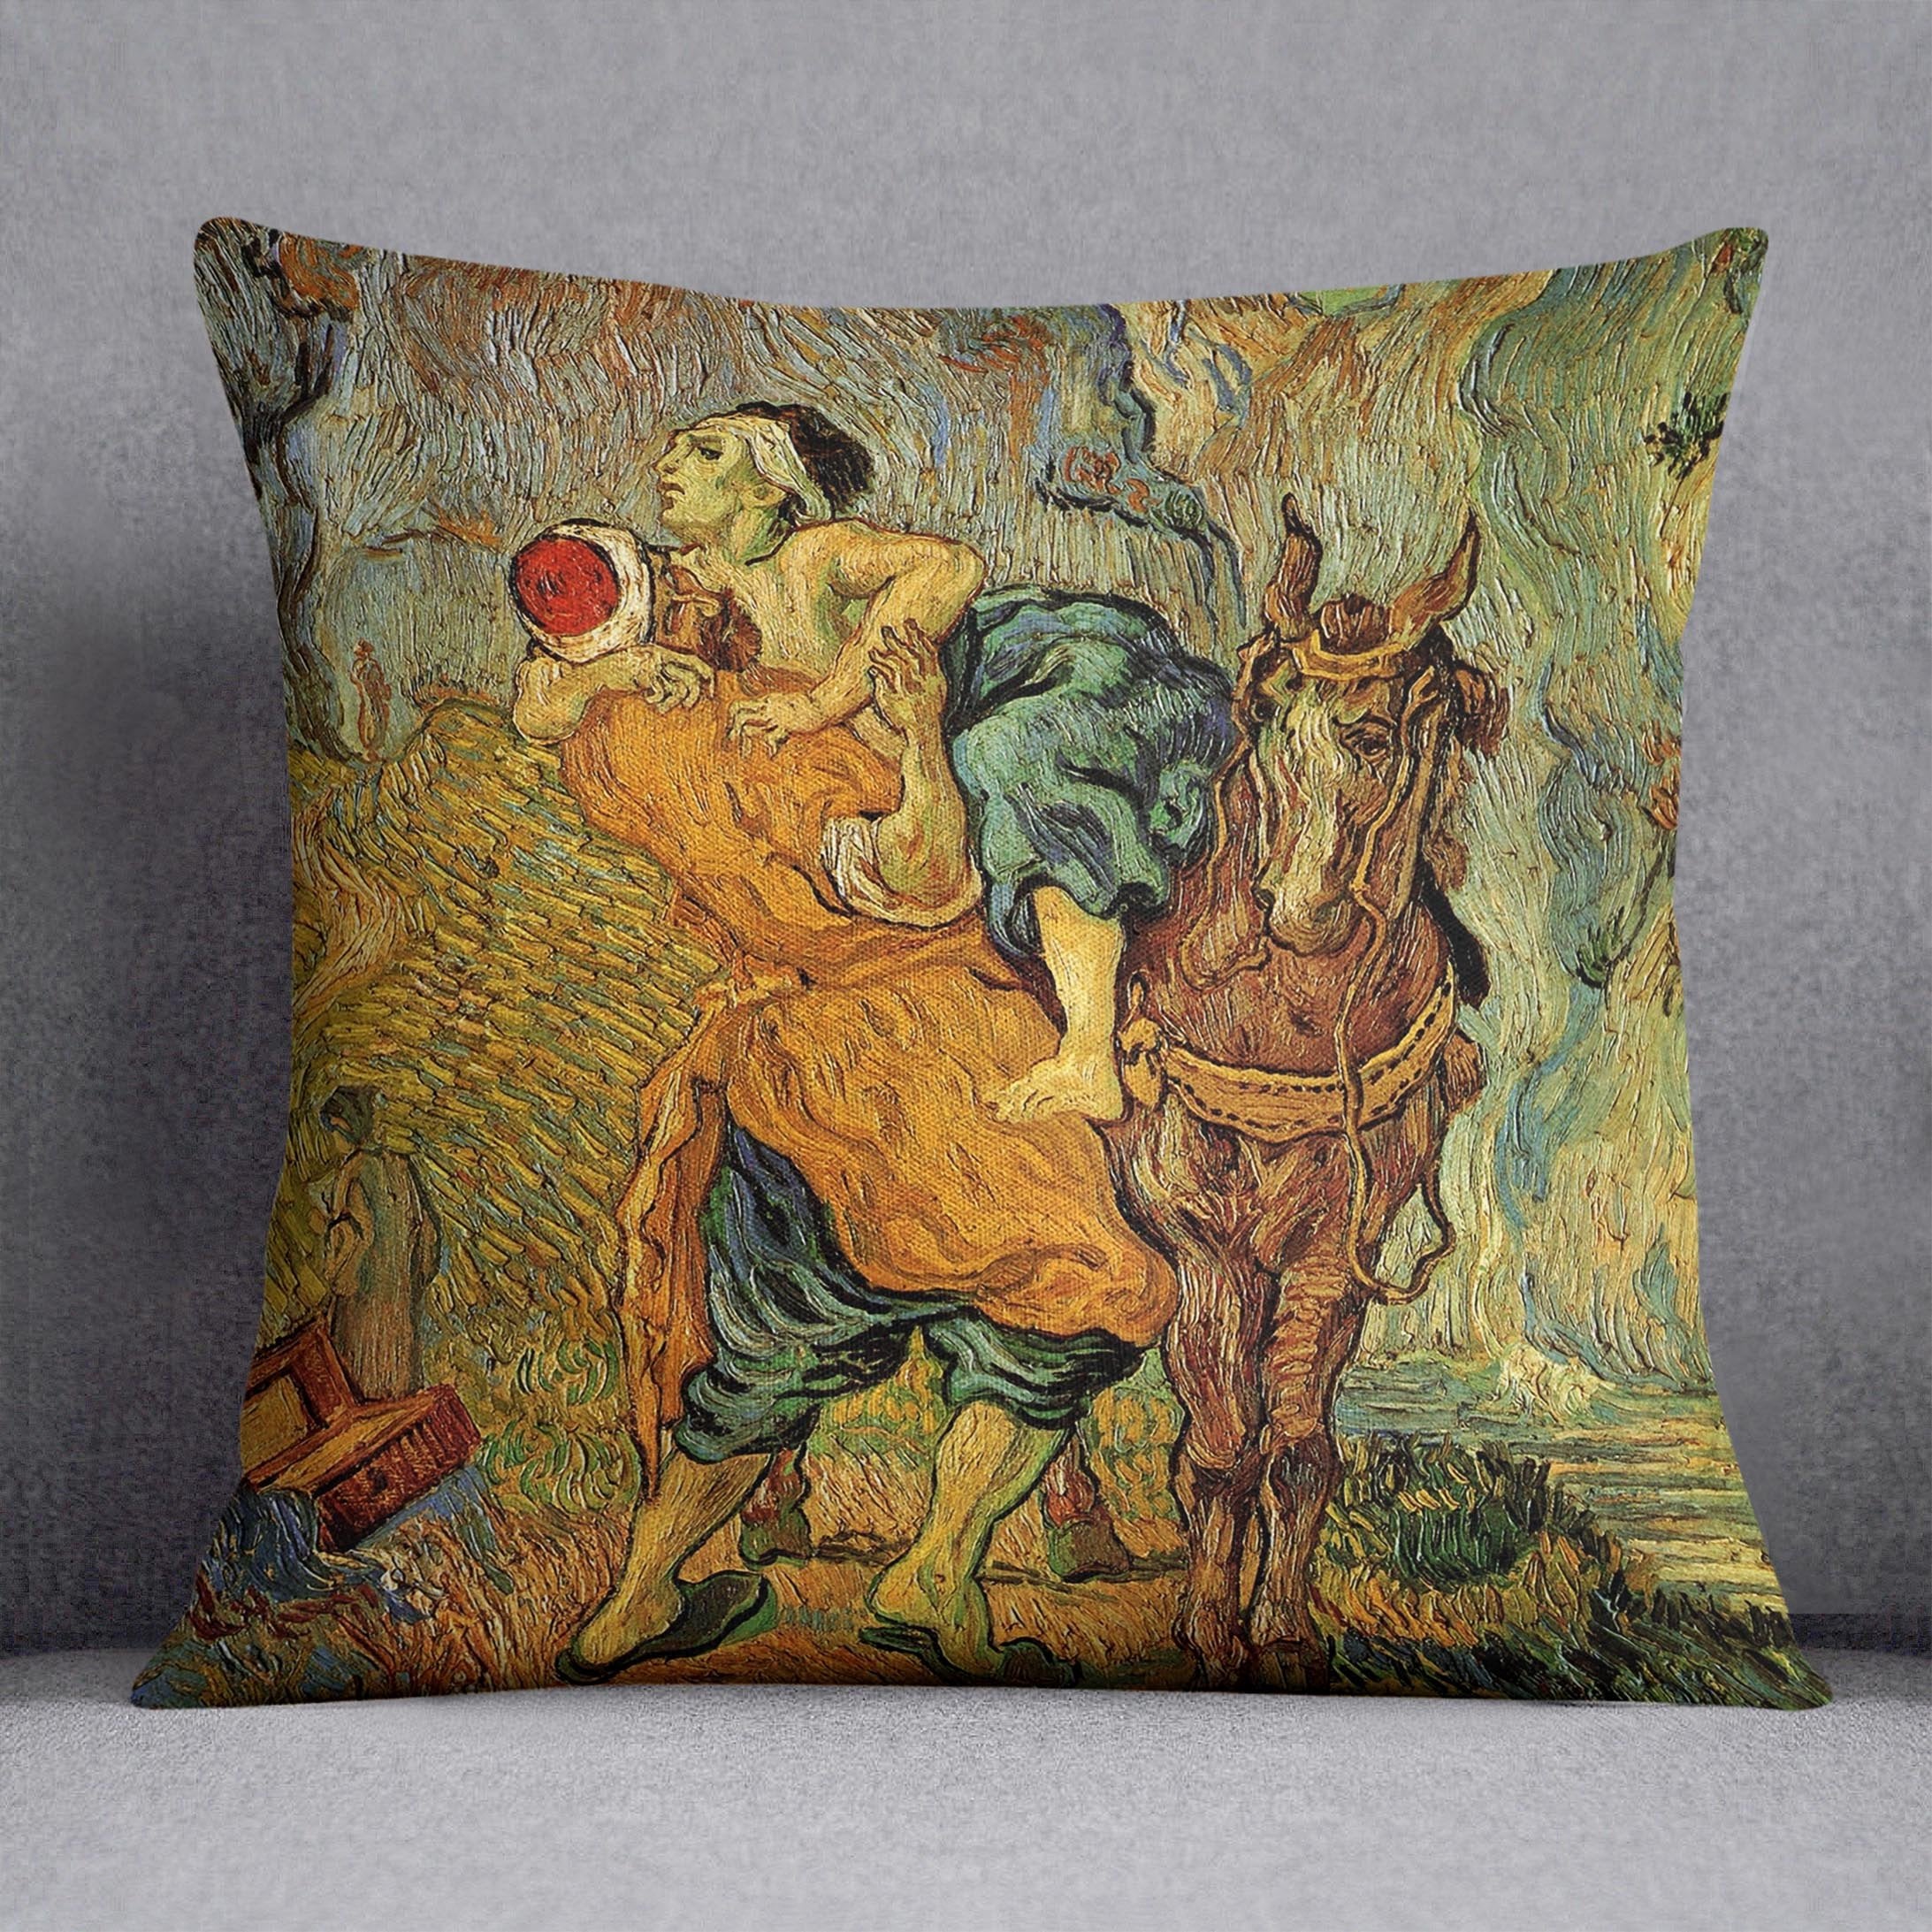 The Good Samaritan after Delacroix by Van Gogh Throw Pillow